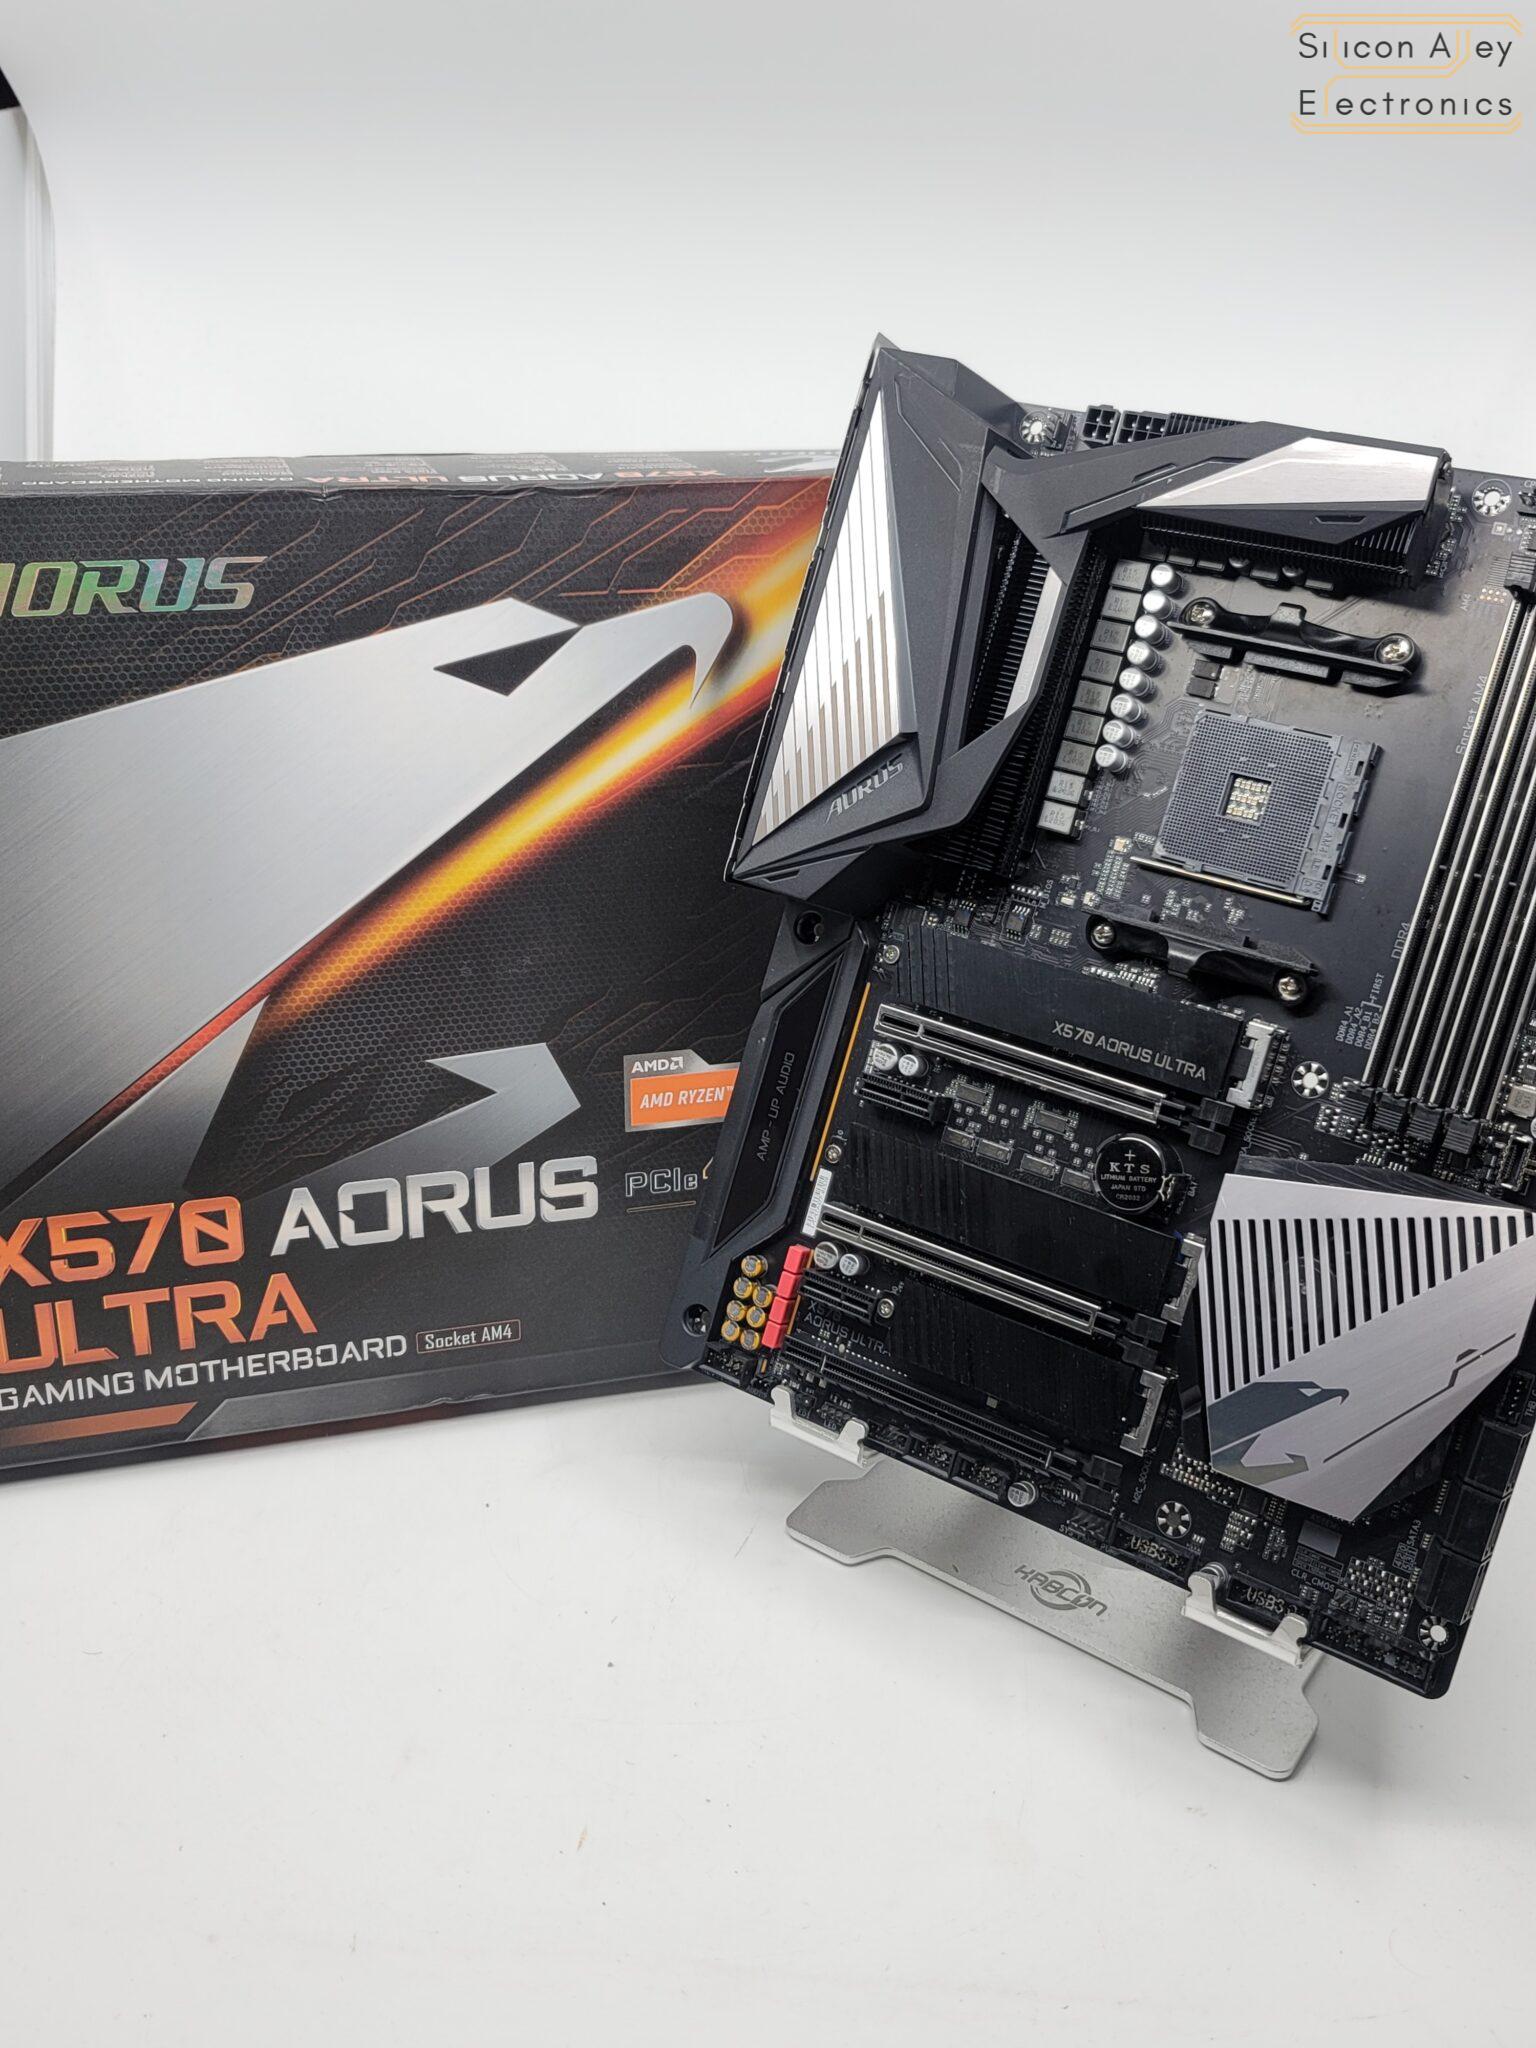 Gigabyte X570 Aorus Ultra AMD AM4 ATX Motherboard - Silicon Alley